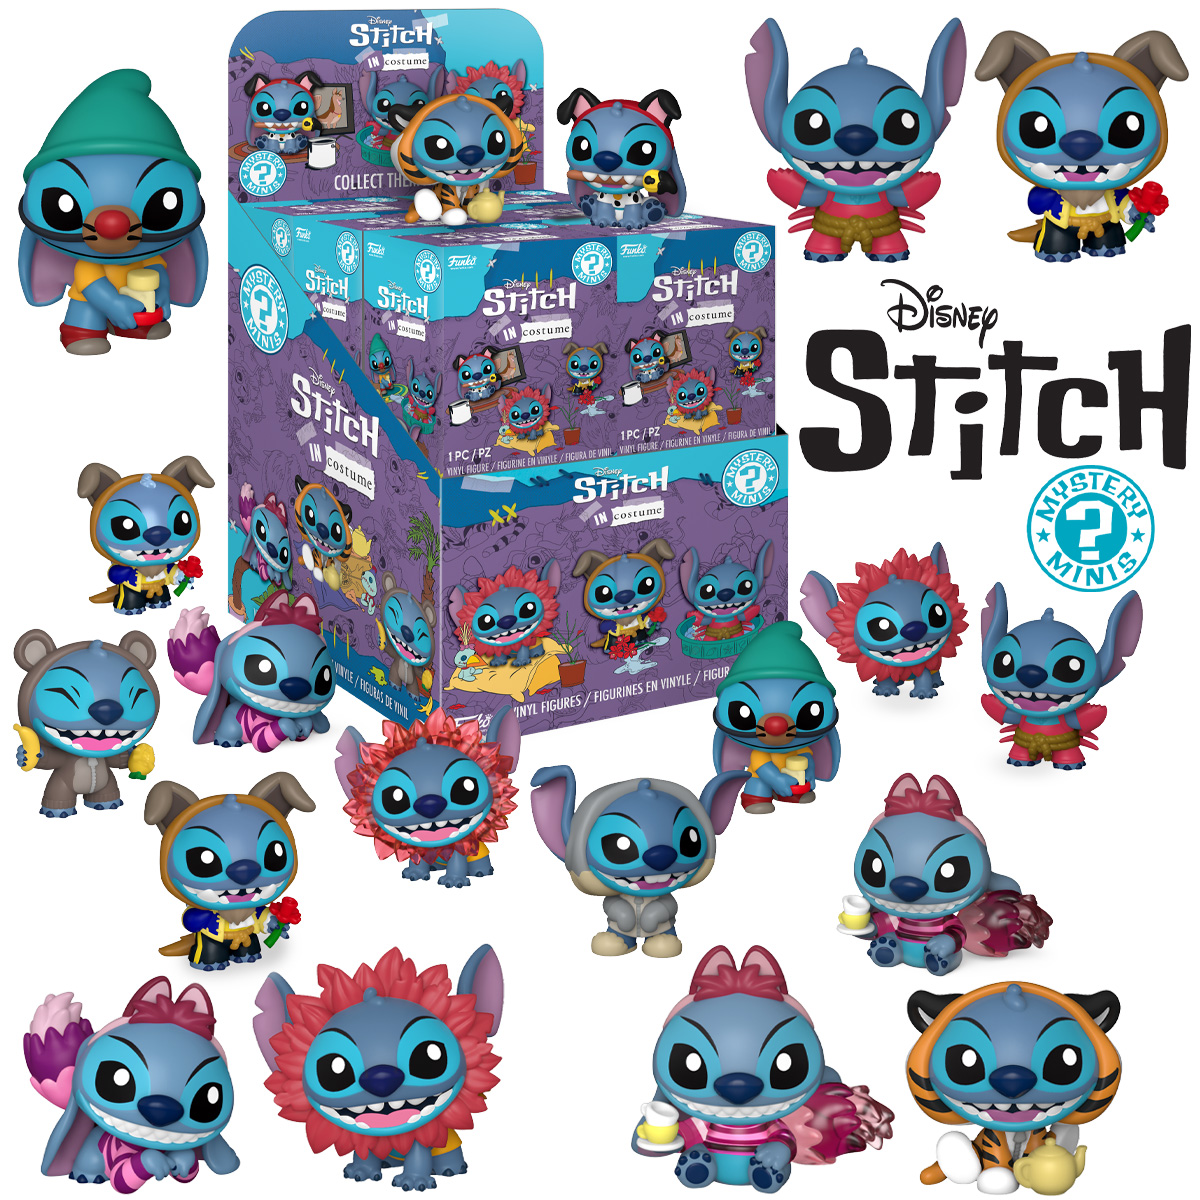 Mini-Figuras Stitch Mystery Minis com Fantasias dos Personagens Disney (Blind-Box)